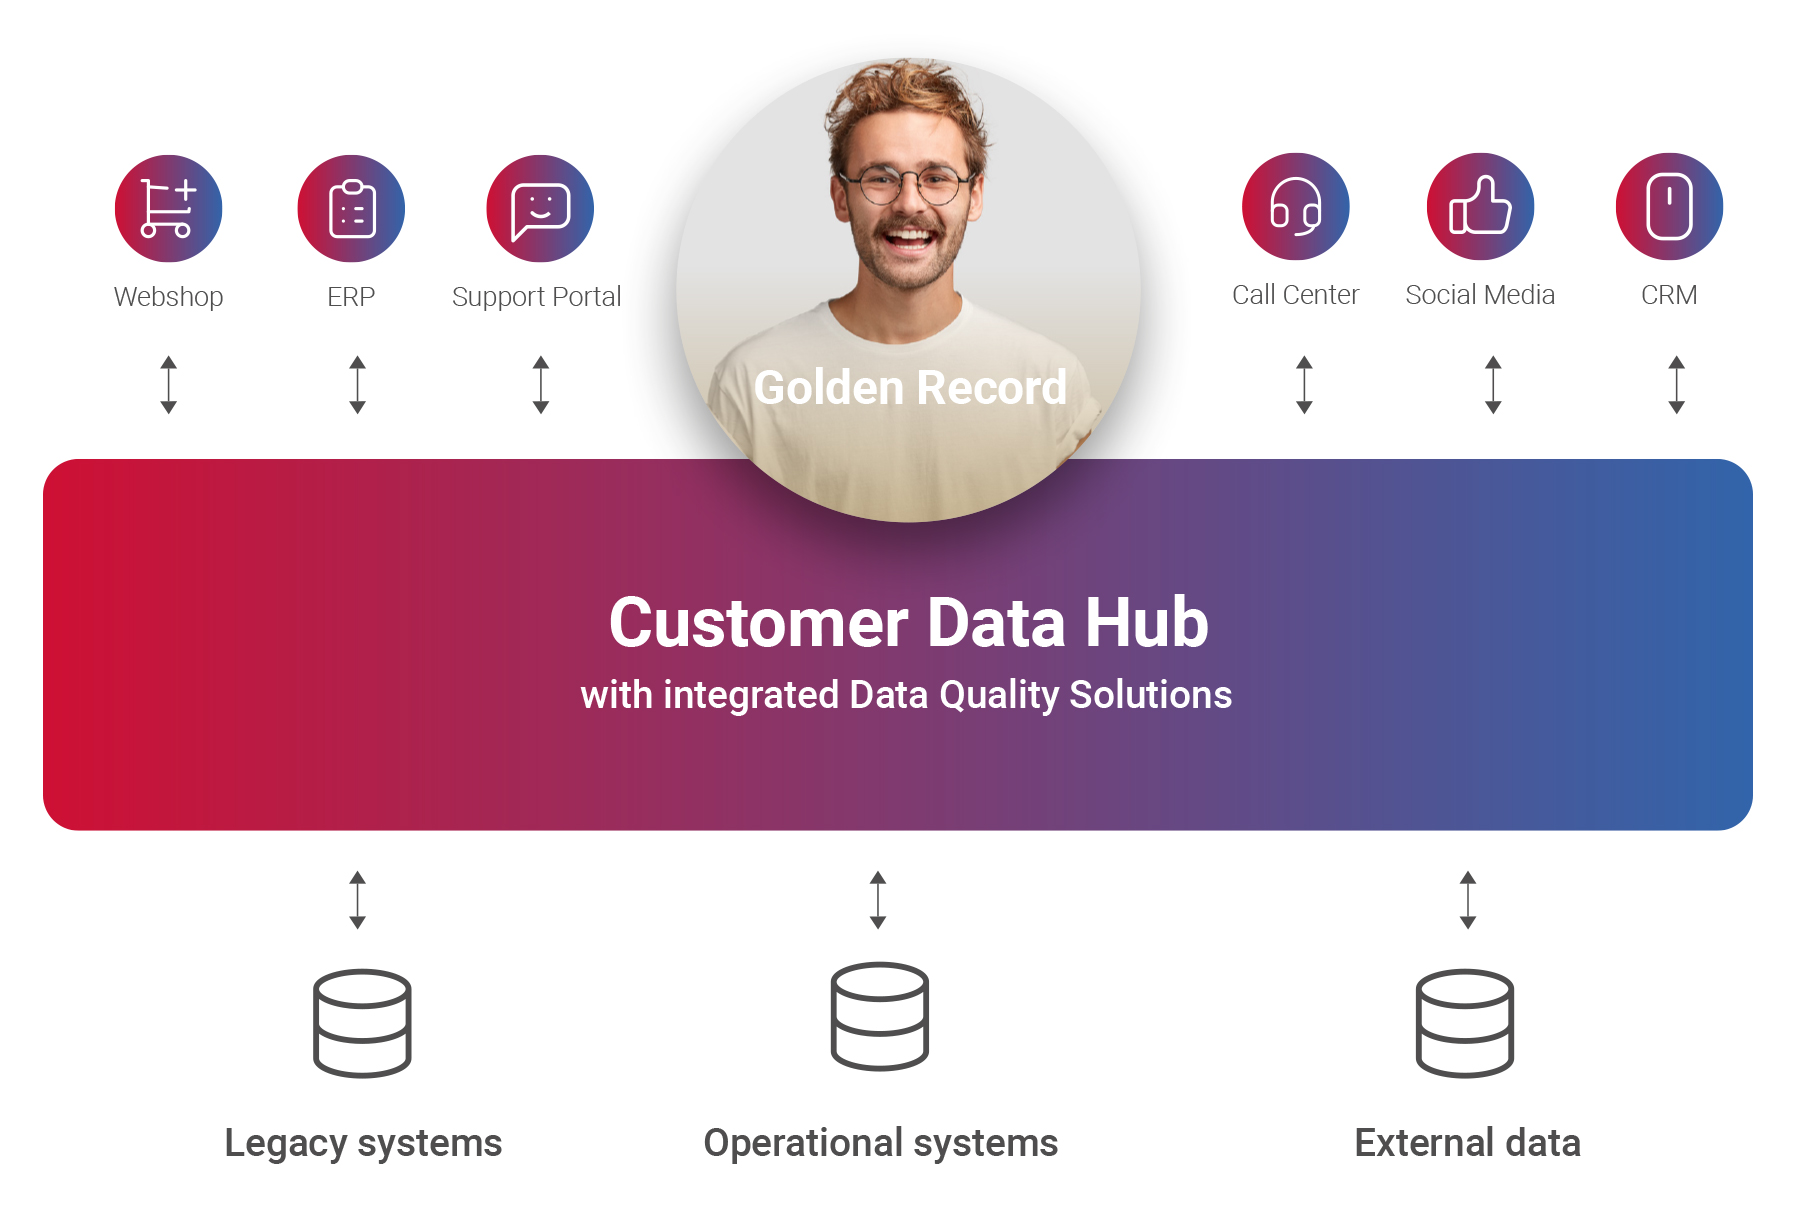 Customer Data Hub